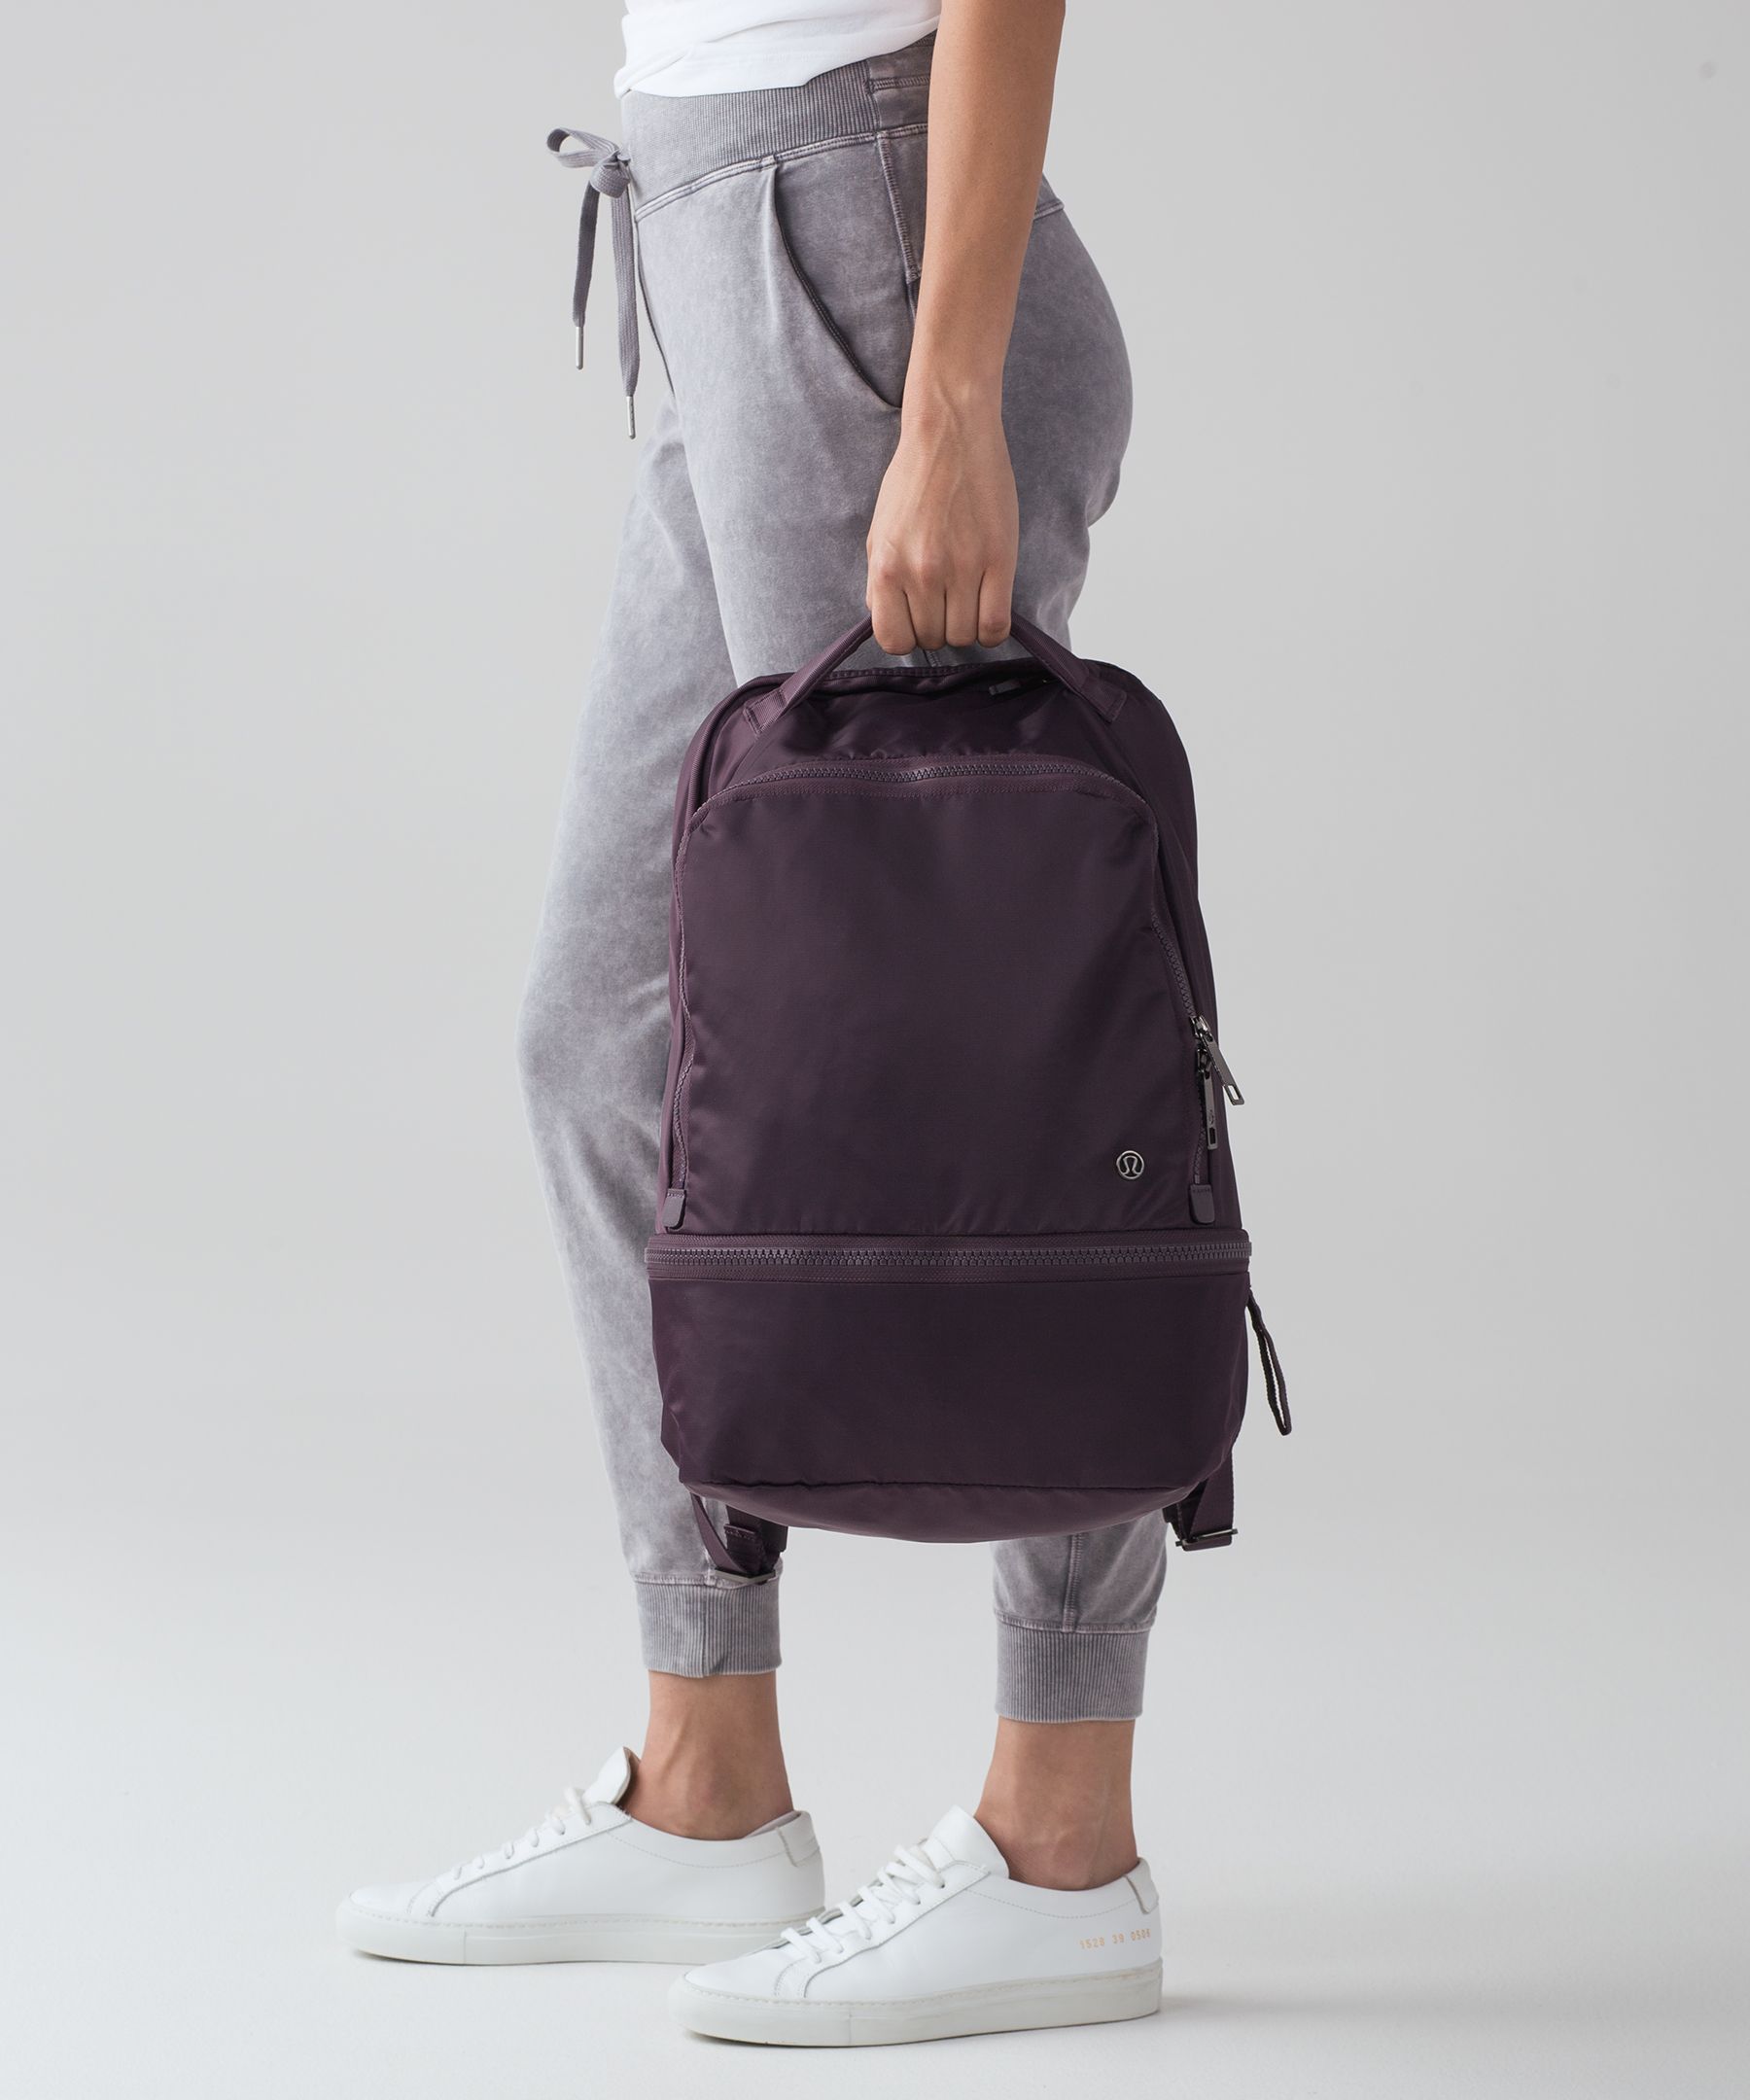 lululemon backpack canada